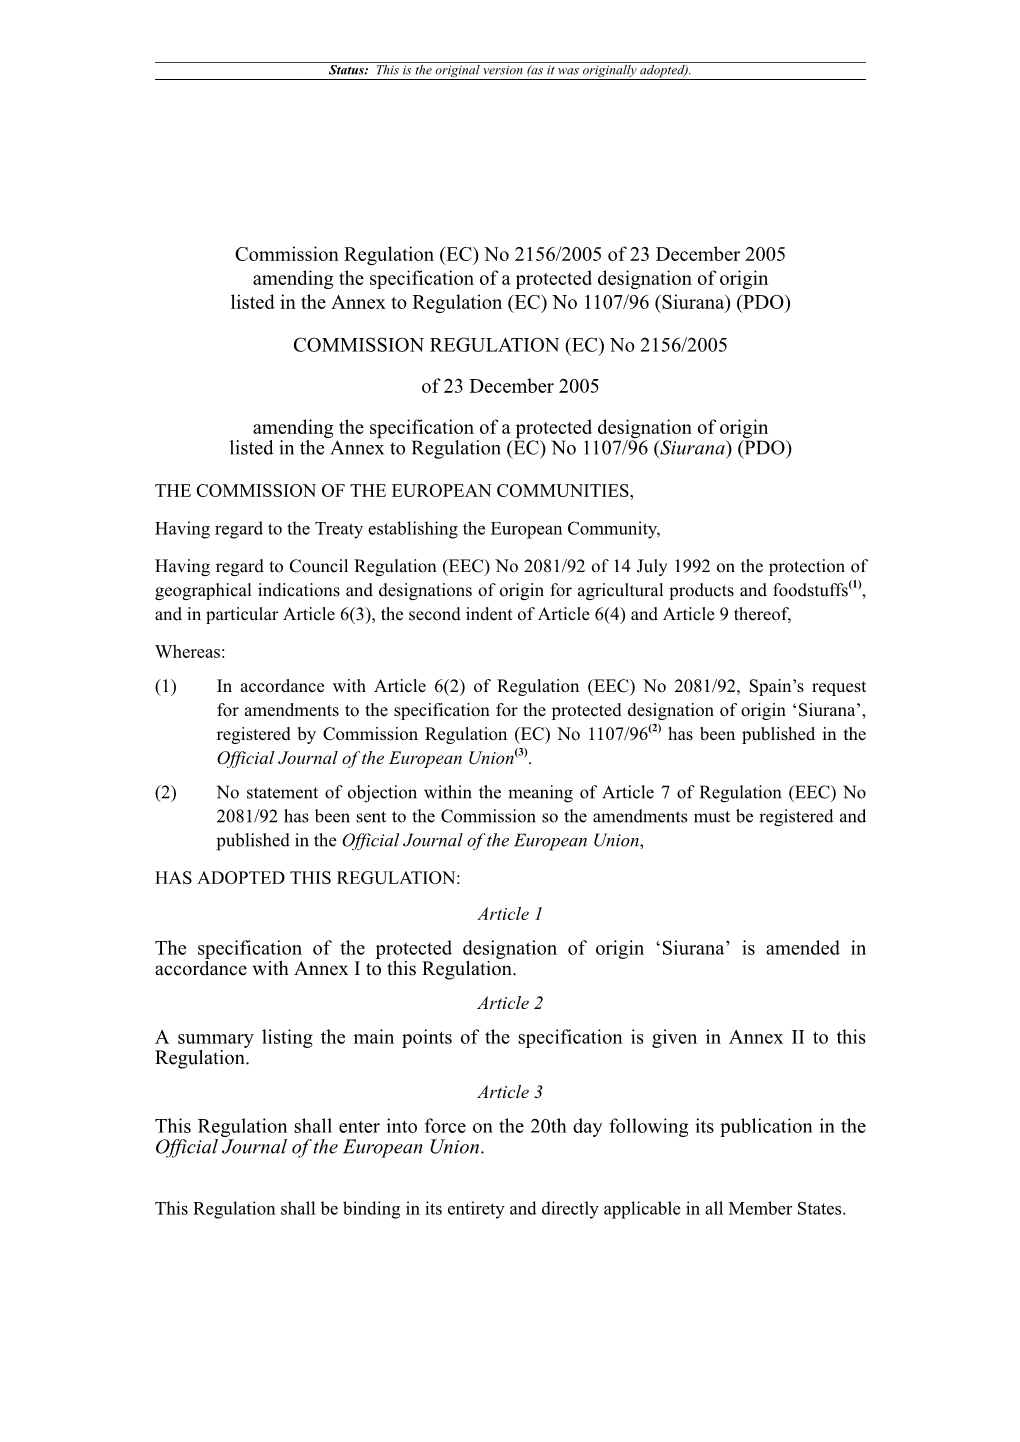 Commission Regulation (EC) No 2156/2005 Of